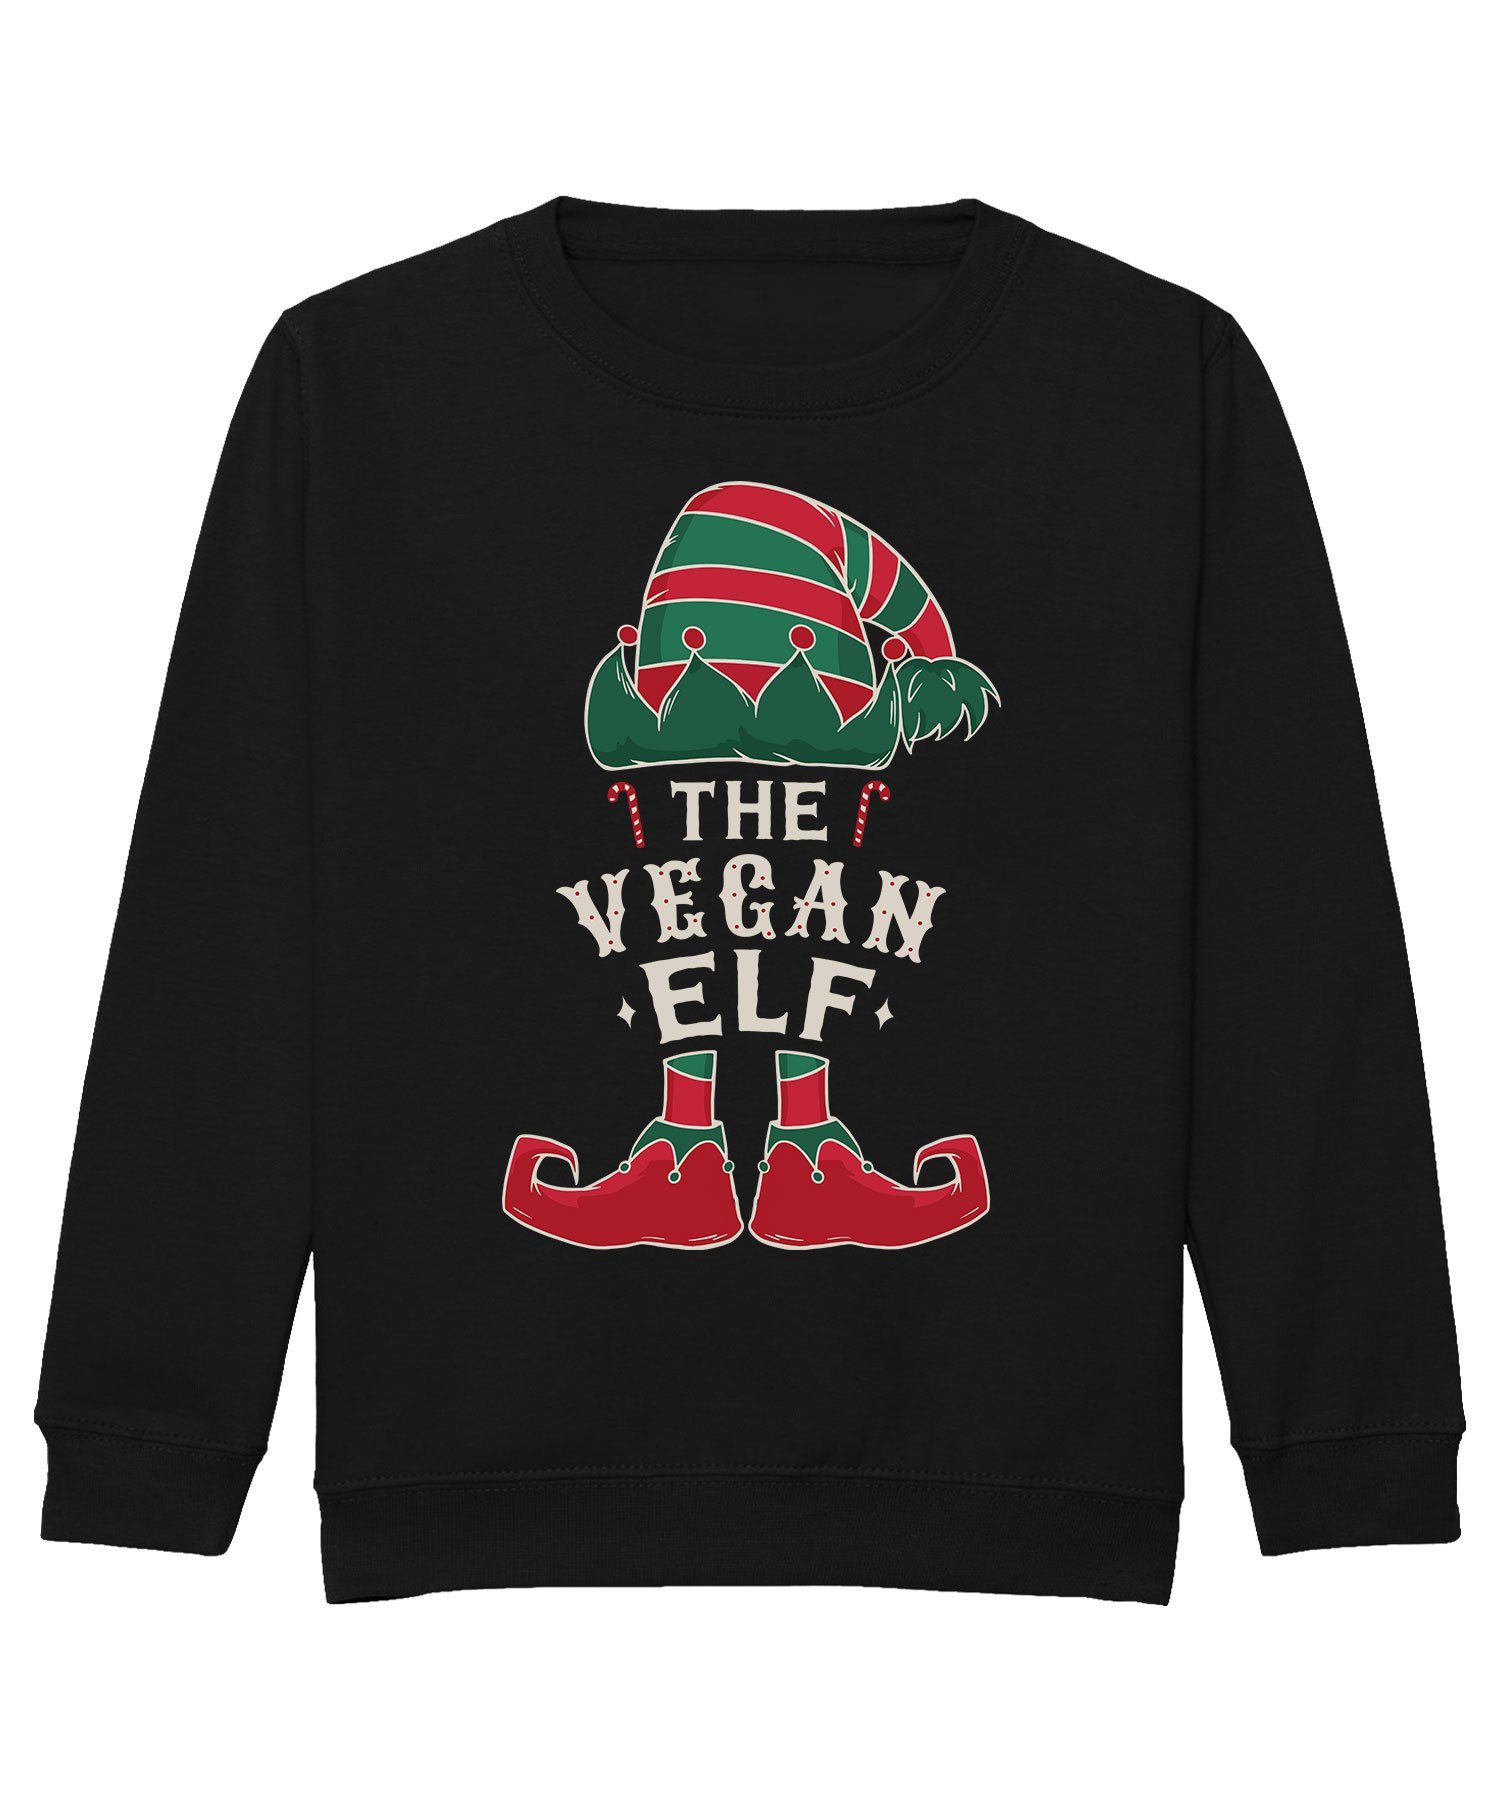 Pullover Sweatshirt Veganer Geschenk (1-tlg) Elf Quattro Vegan The Sweatshirt Formatee Kinder Weihnachten